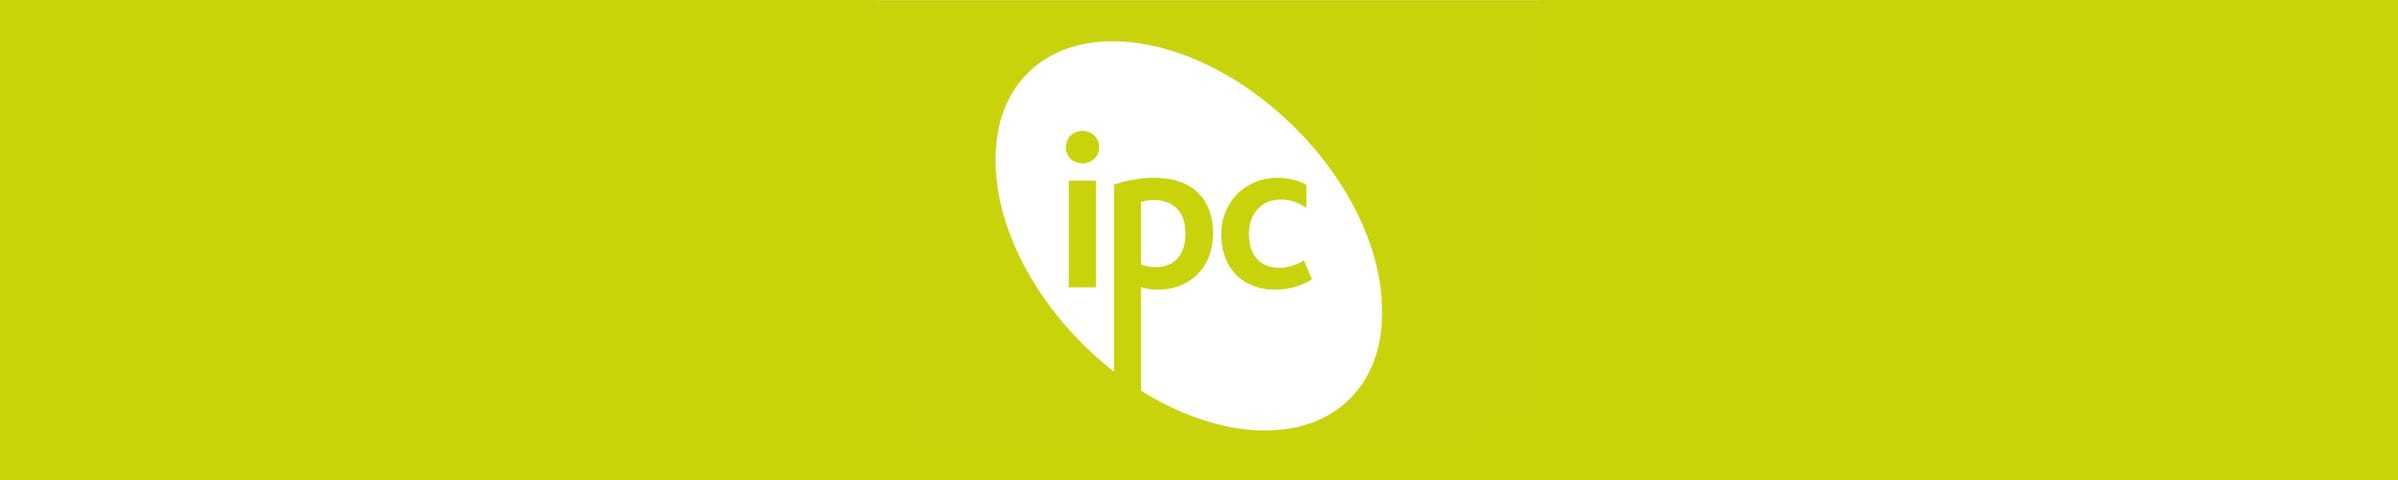 IPC - International Primary Curriculum